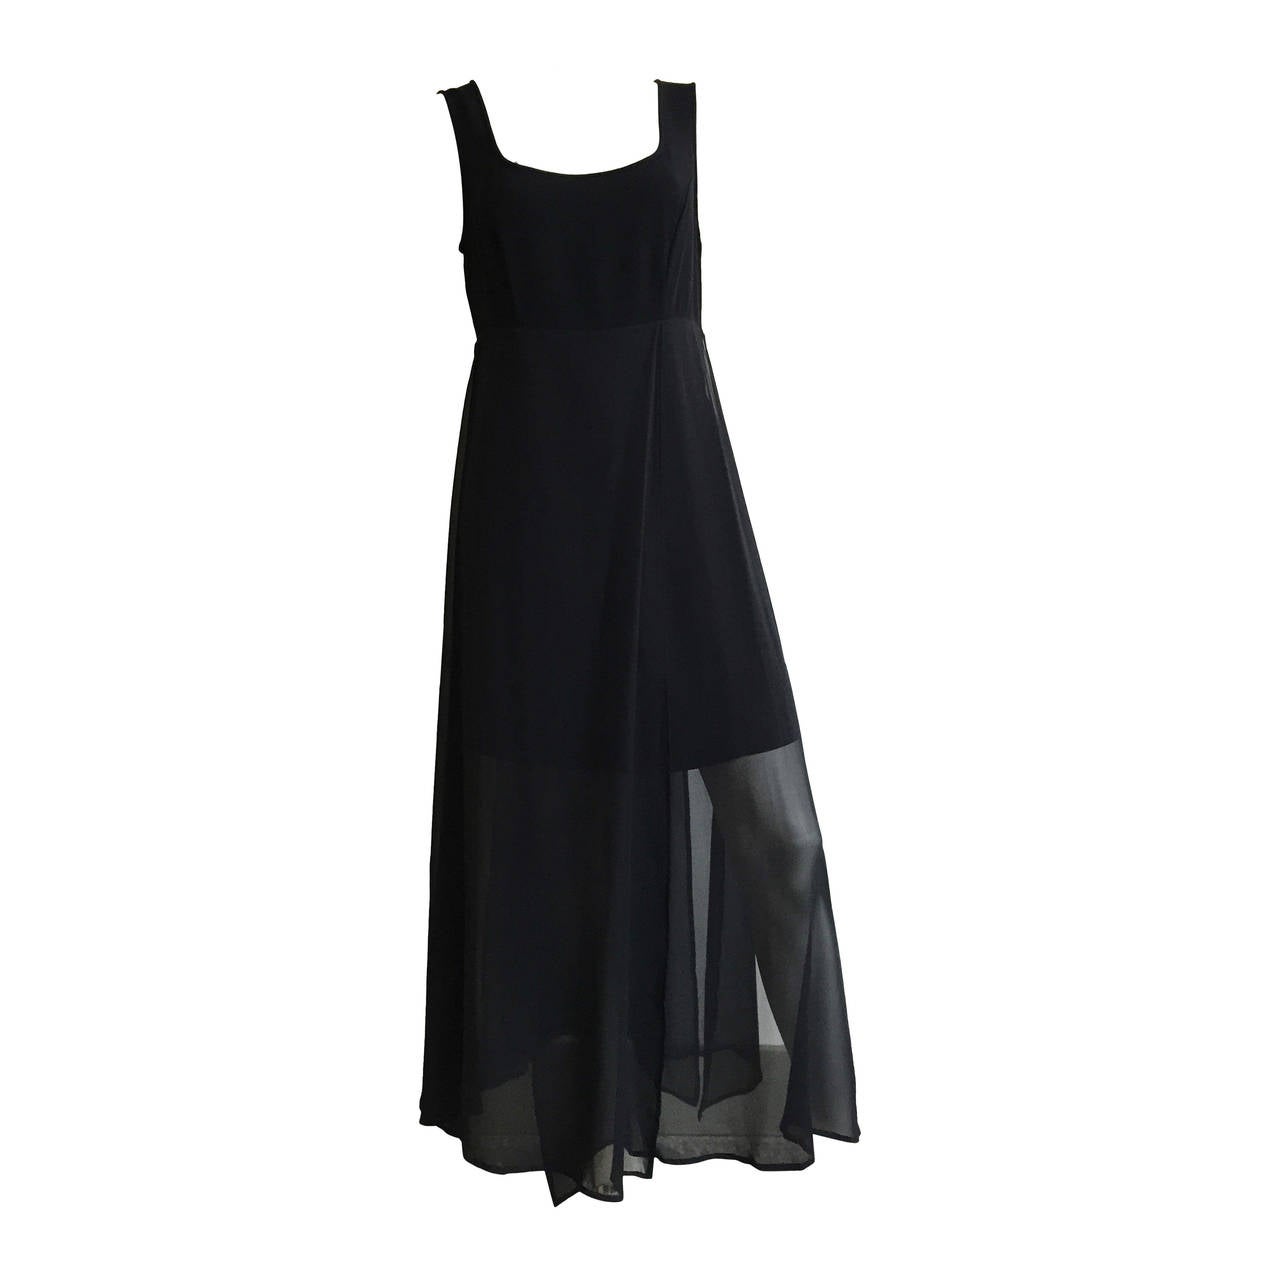 Claude Montana 90s Black Dress Size 8. For Sale